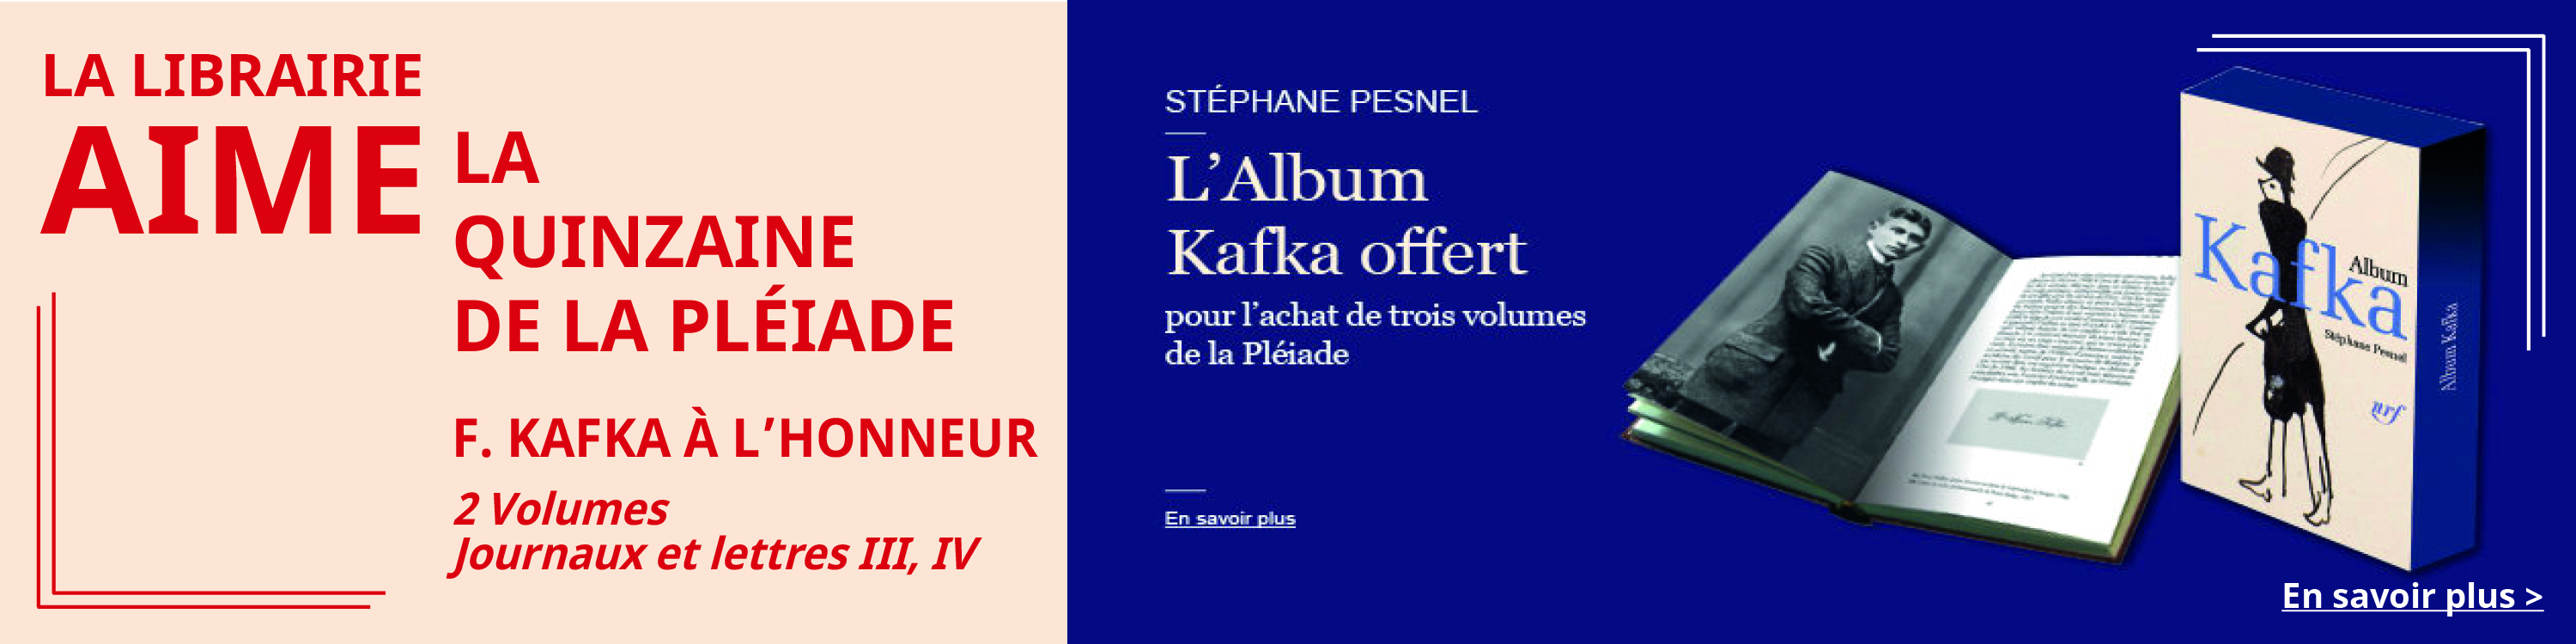 La Librairie Gallimard aime la quinzaine de la Pléiade-album Kafka offert